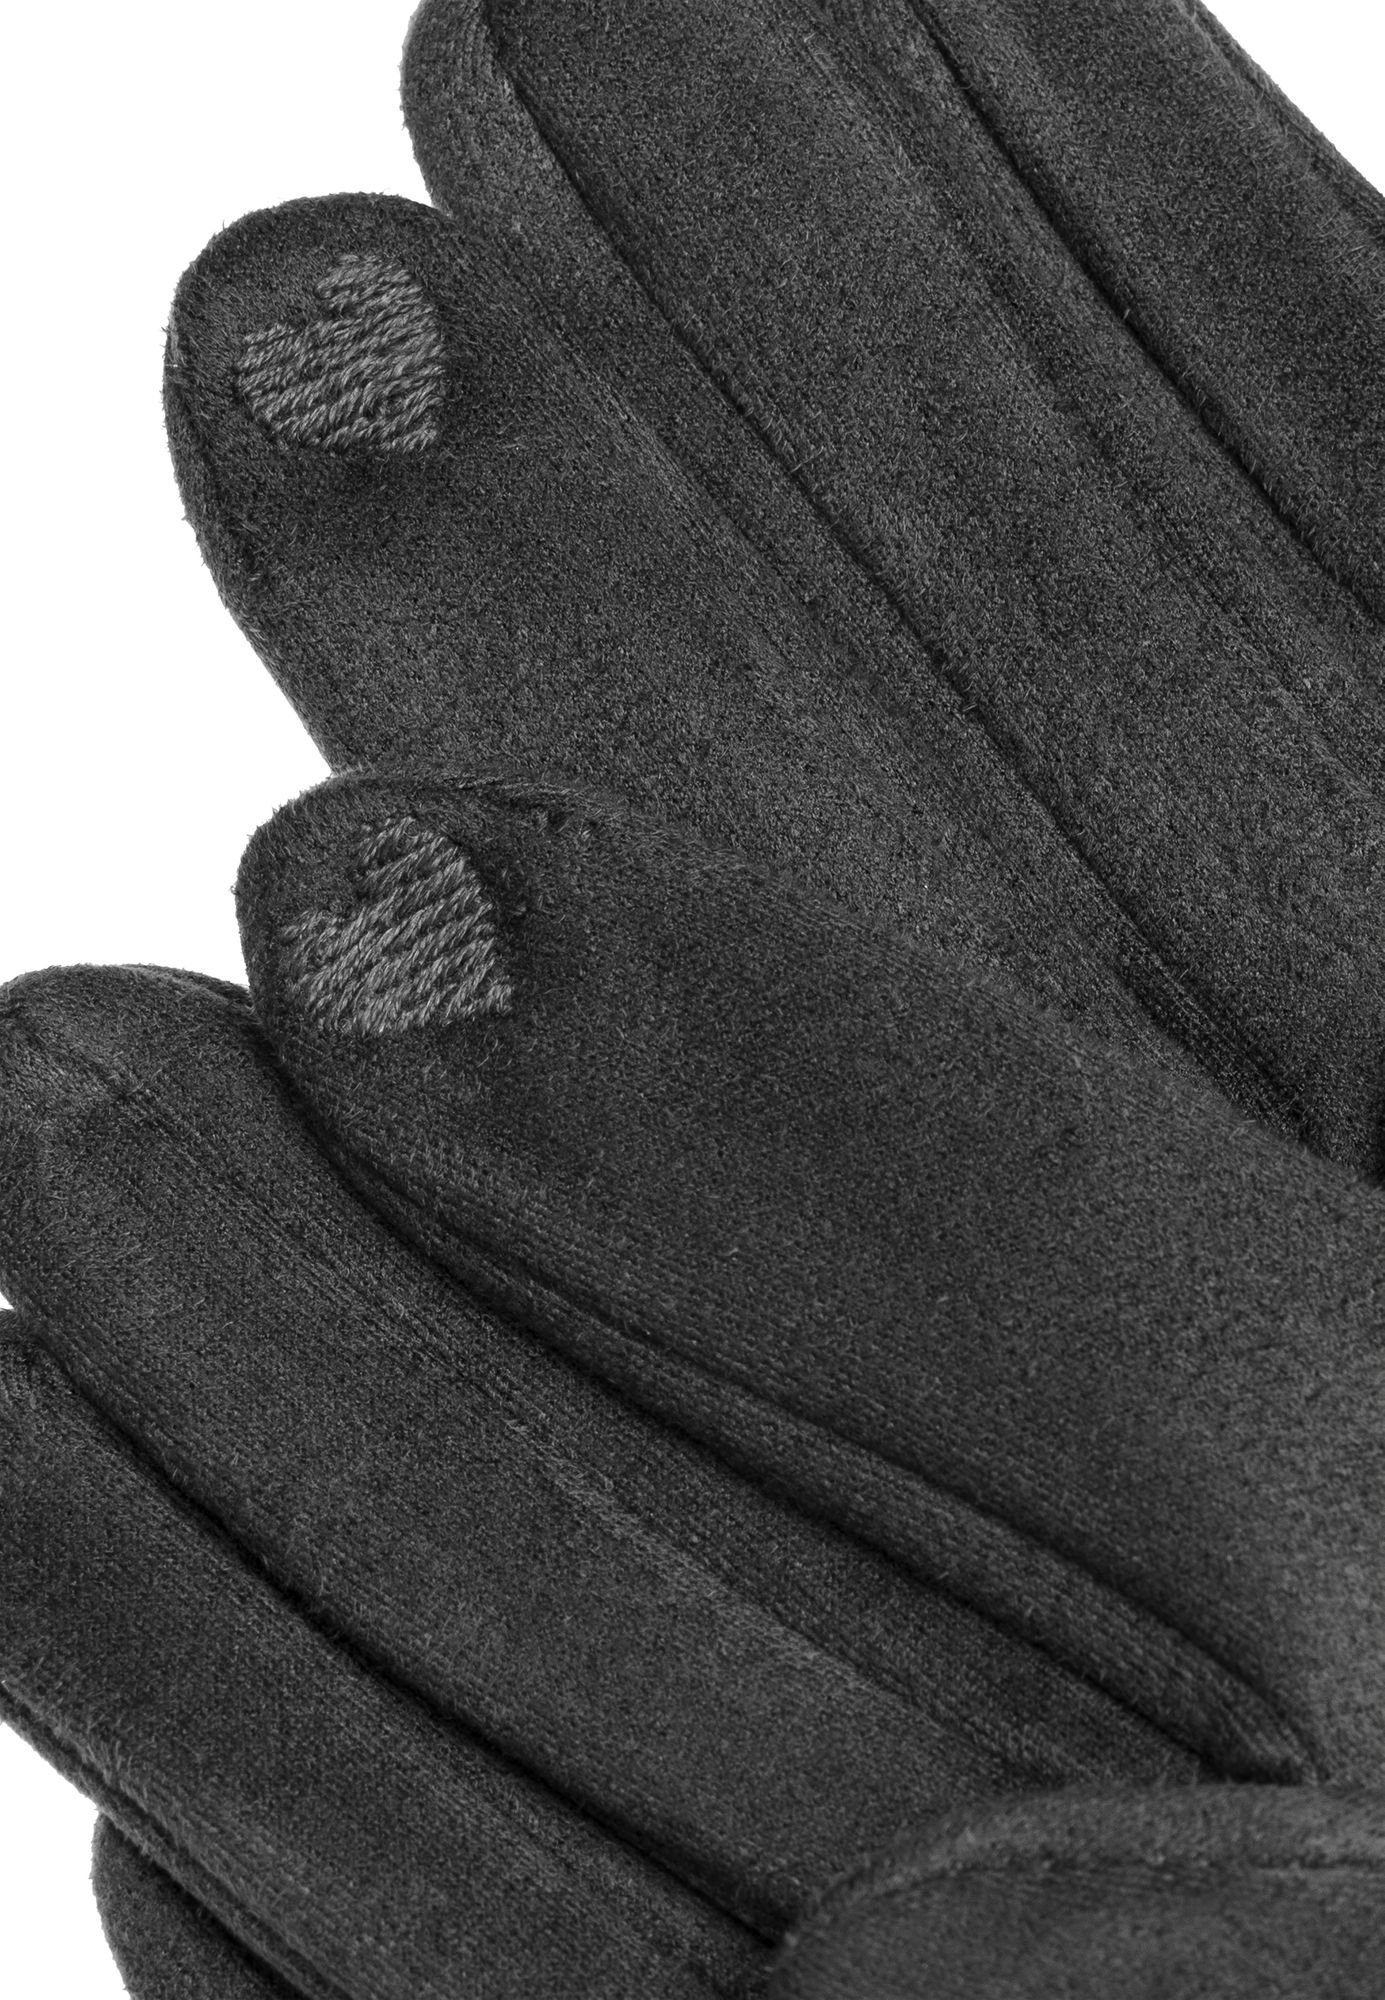 Handschuhe Strickhandschuhe Damen GLV013 uni dunkelgrau Winter Caspar klassisch elegante